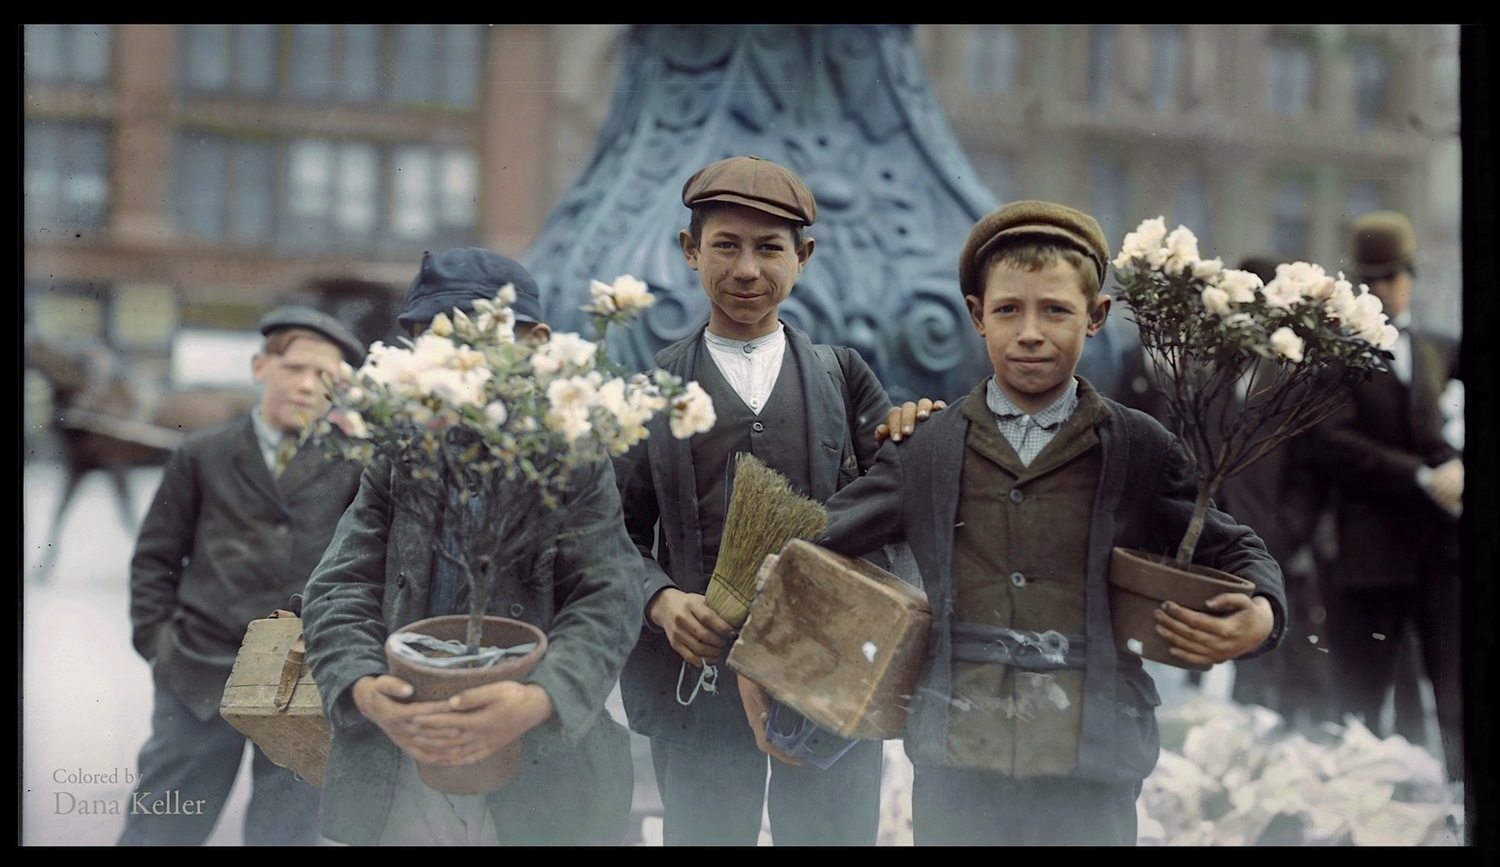 Boys buying flowers in New York, 1908.